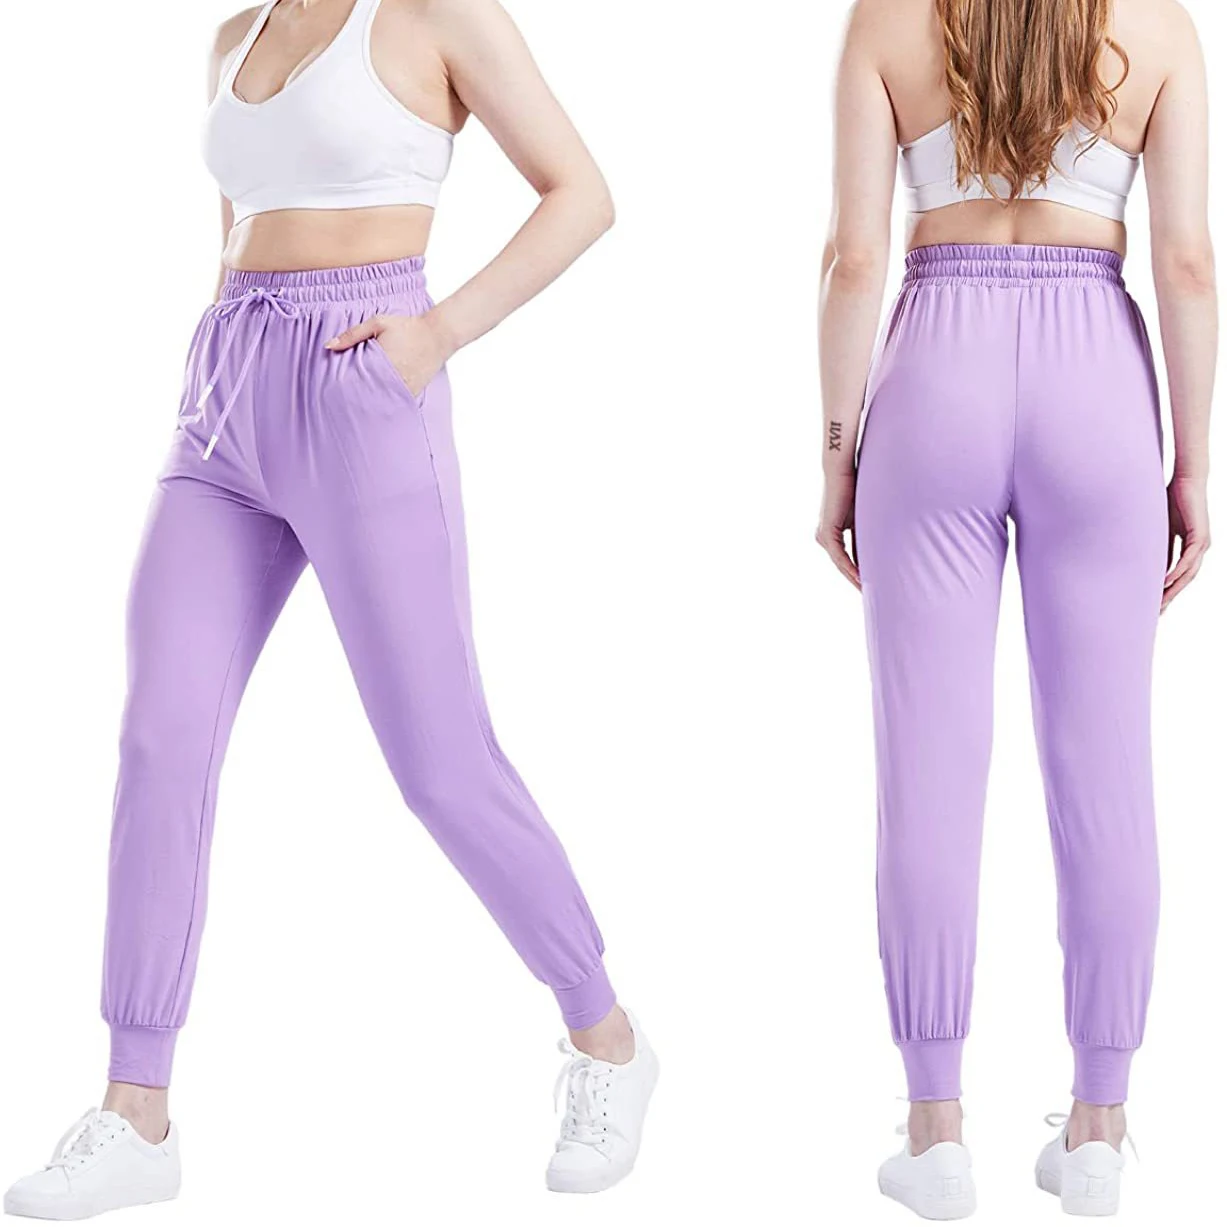 

Women's Yoga Fitness pants exercise jogging pants elastic waistband pocket loose Yoga Pants, Grey / black / pink / violet